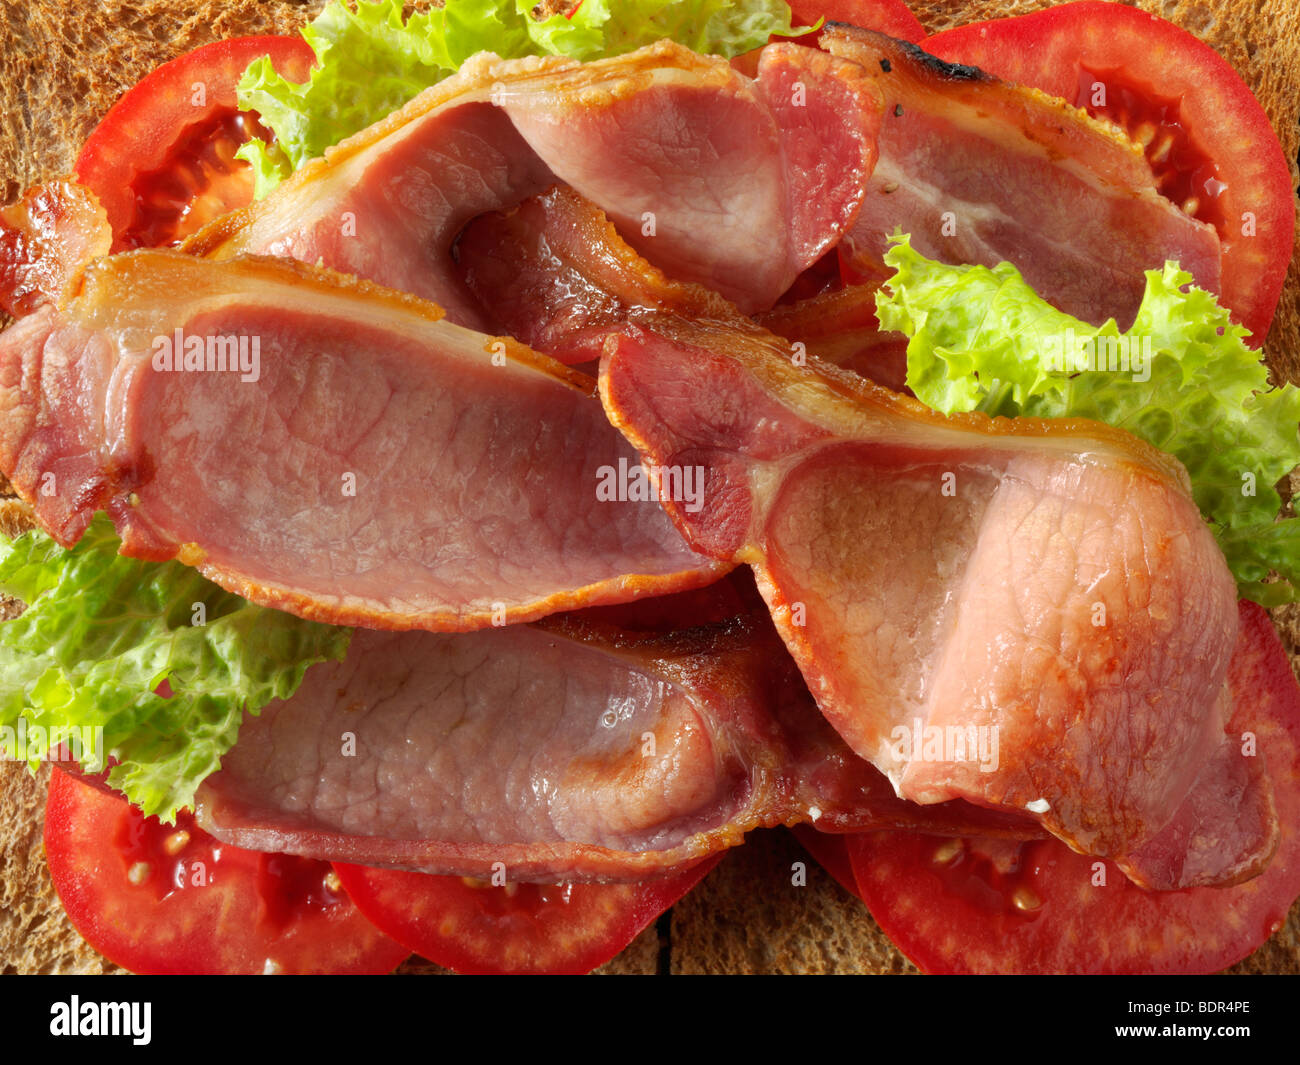 Volver bacon rashers Foto de stock